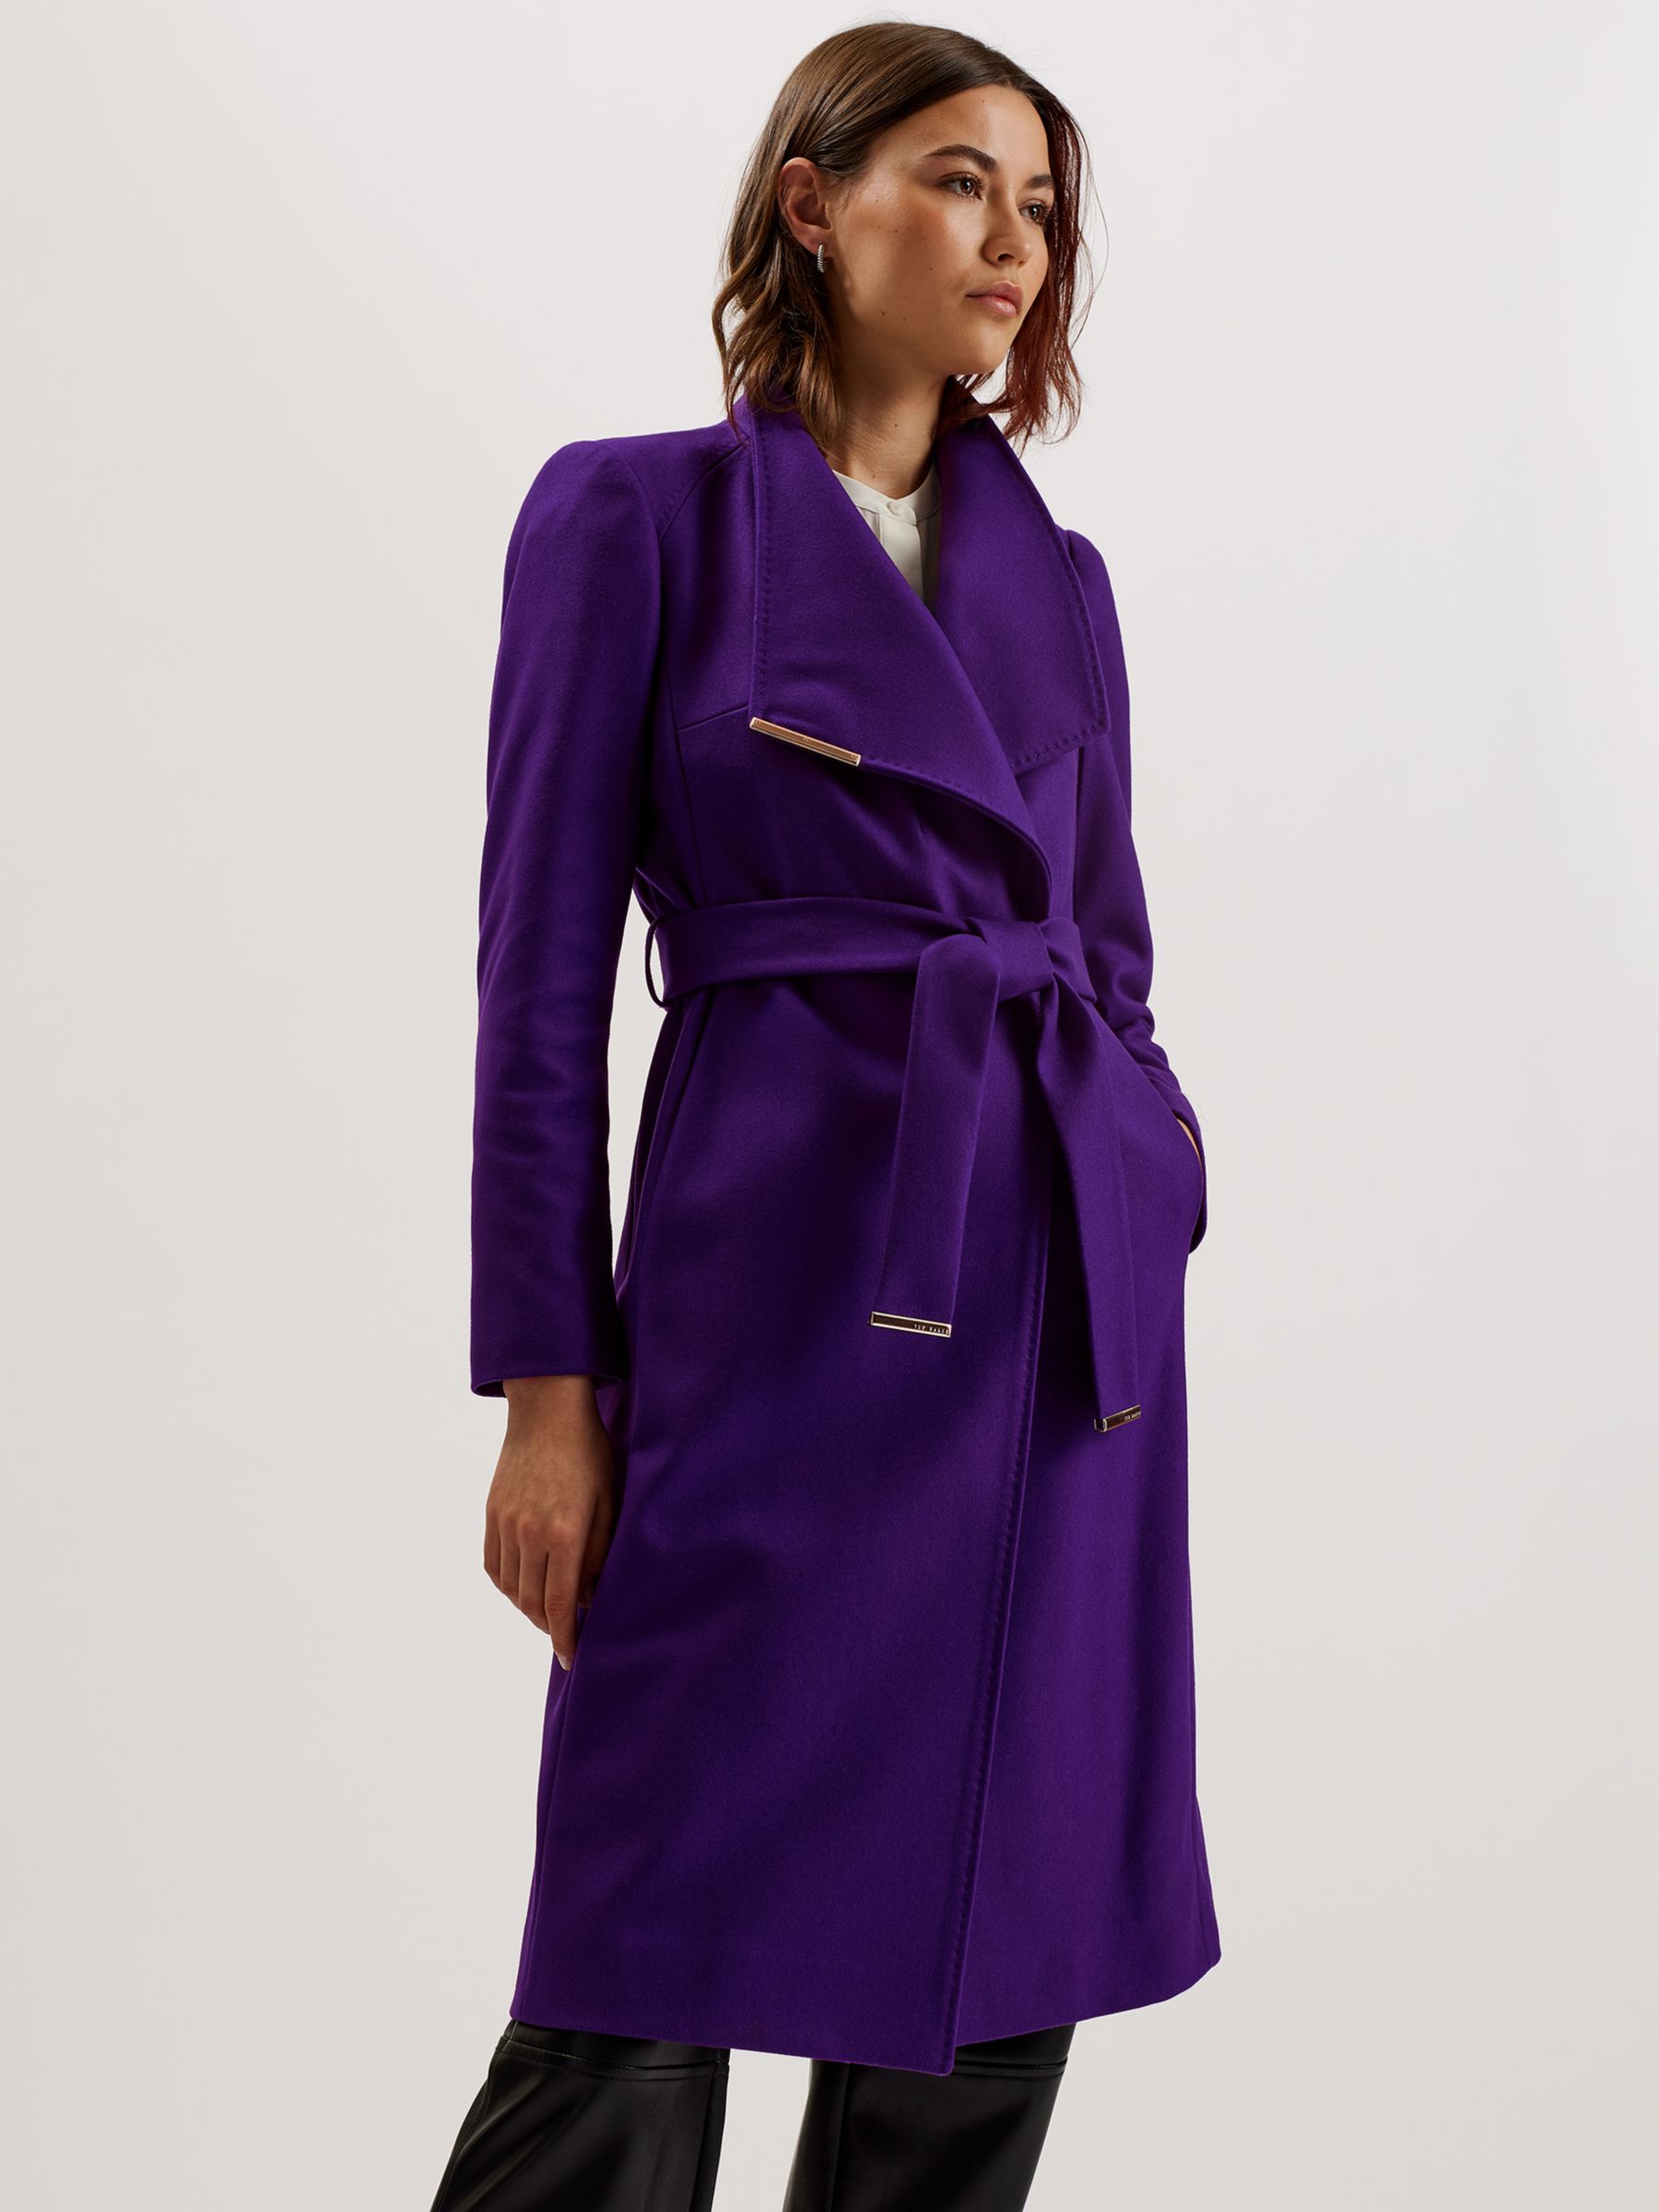 Ted Baker Rose Mid Length Wool Blend Wrap Coat, Purple, 6